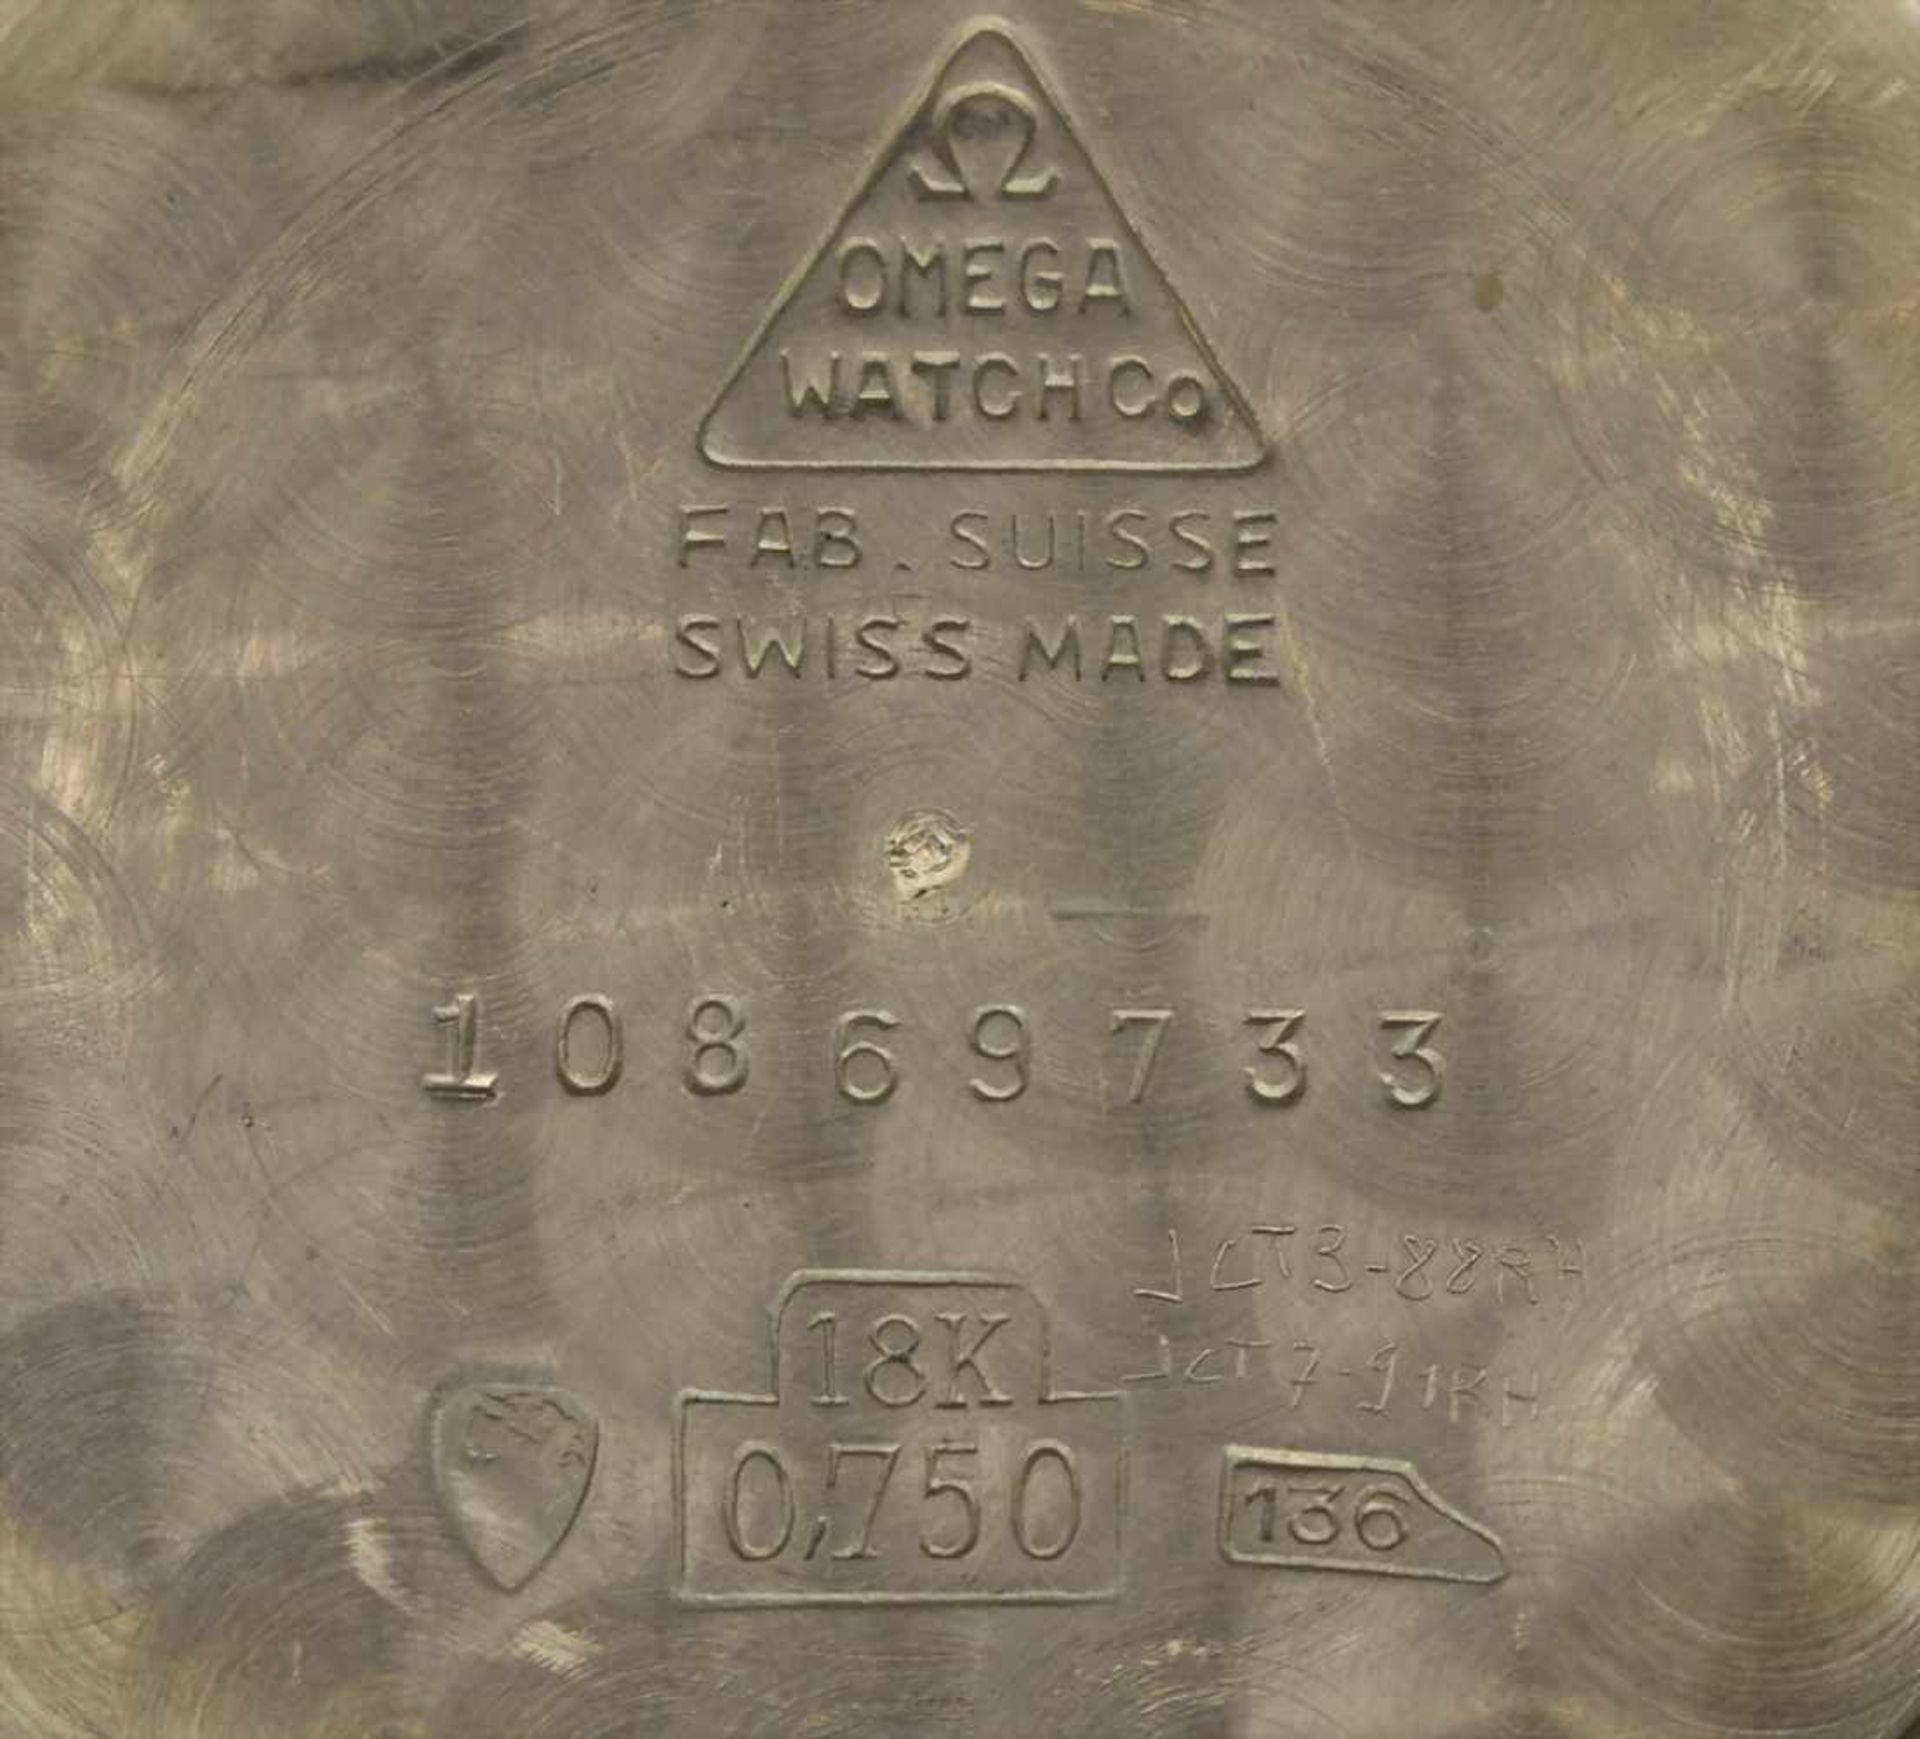 HAU, Omega, Schweiz, um 1955Gehäuse: 18 Kt. 750/000 Gold, Nr. 10869733, Boden verschraubt, - Image 3 of 4